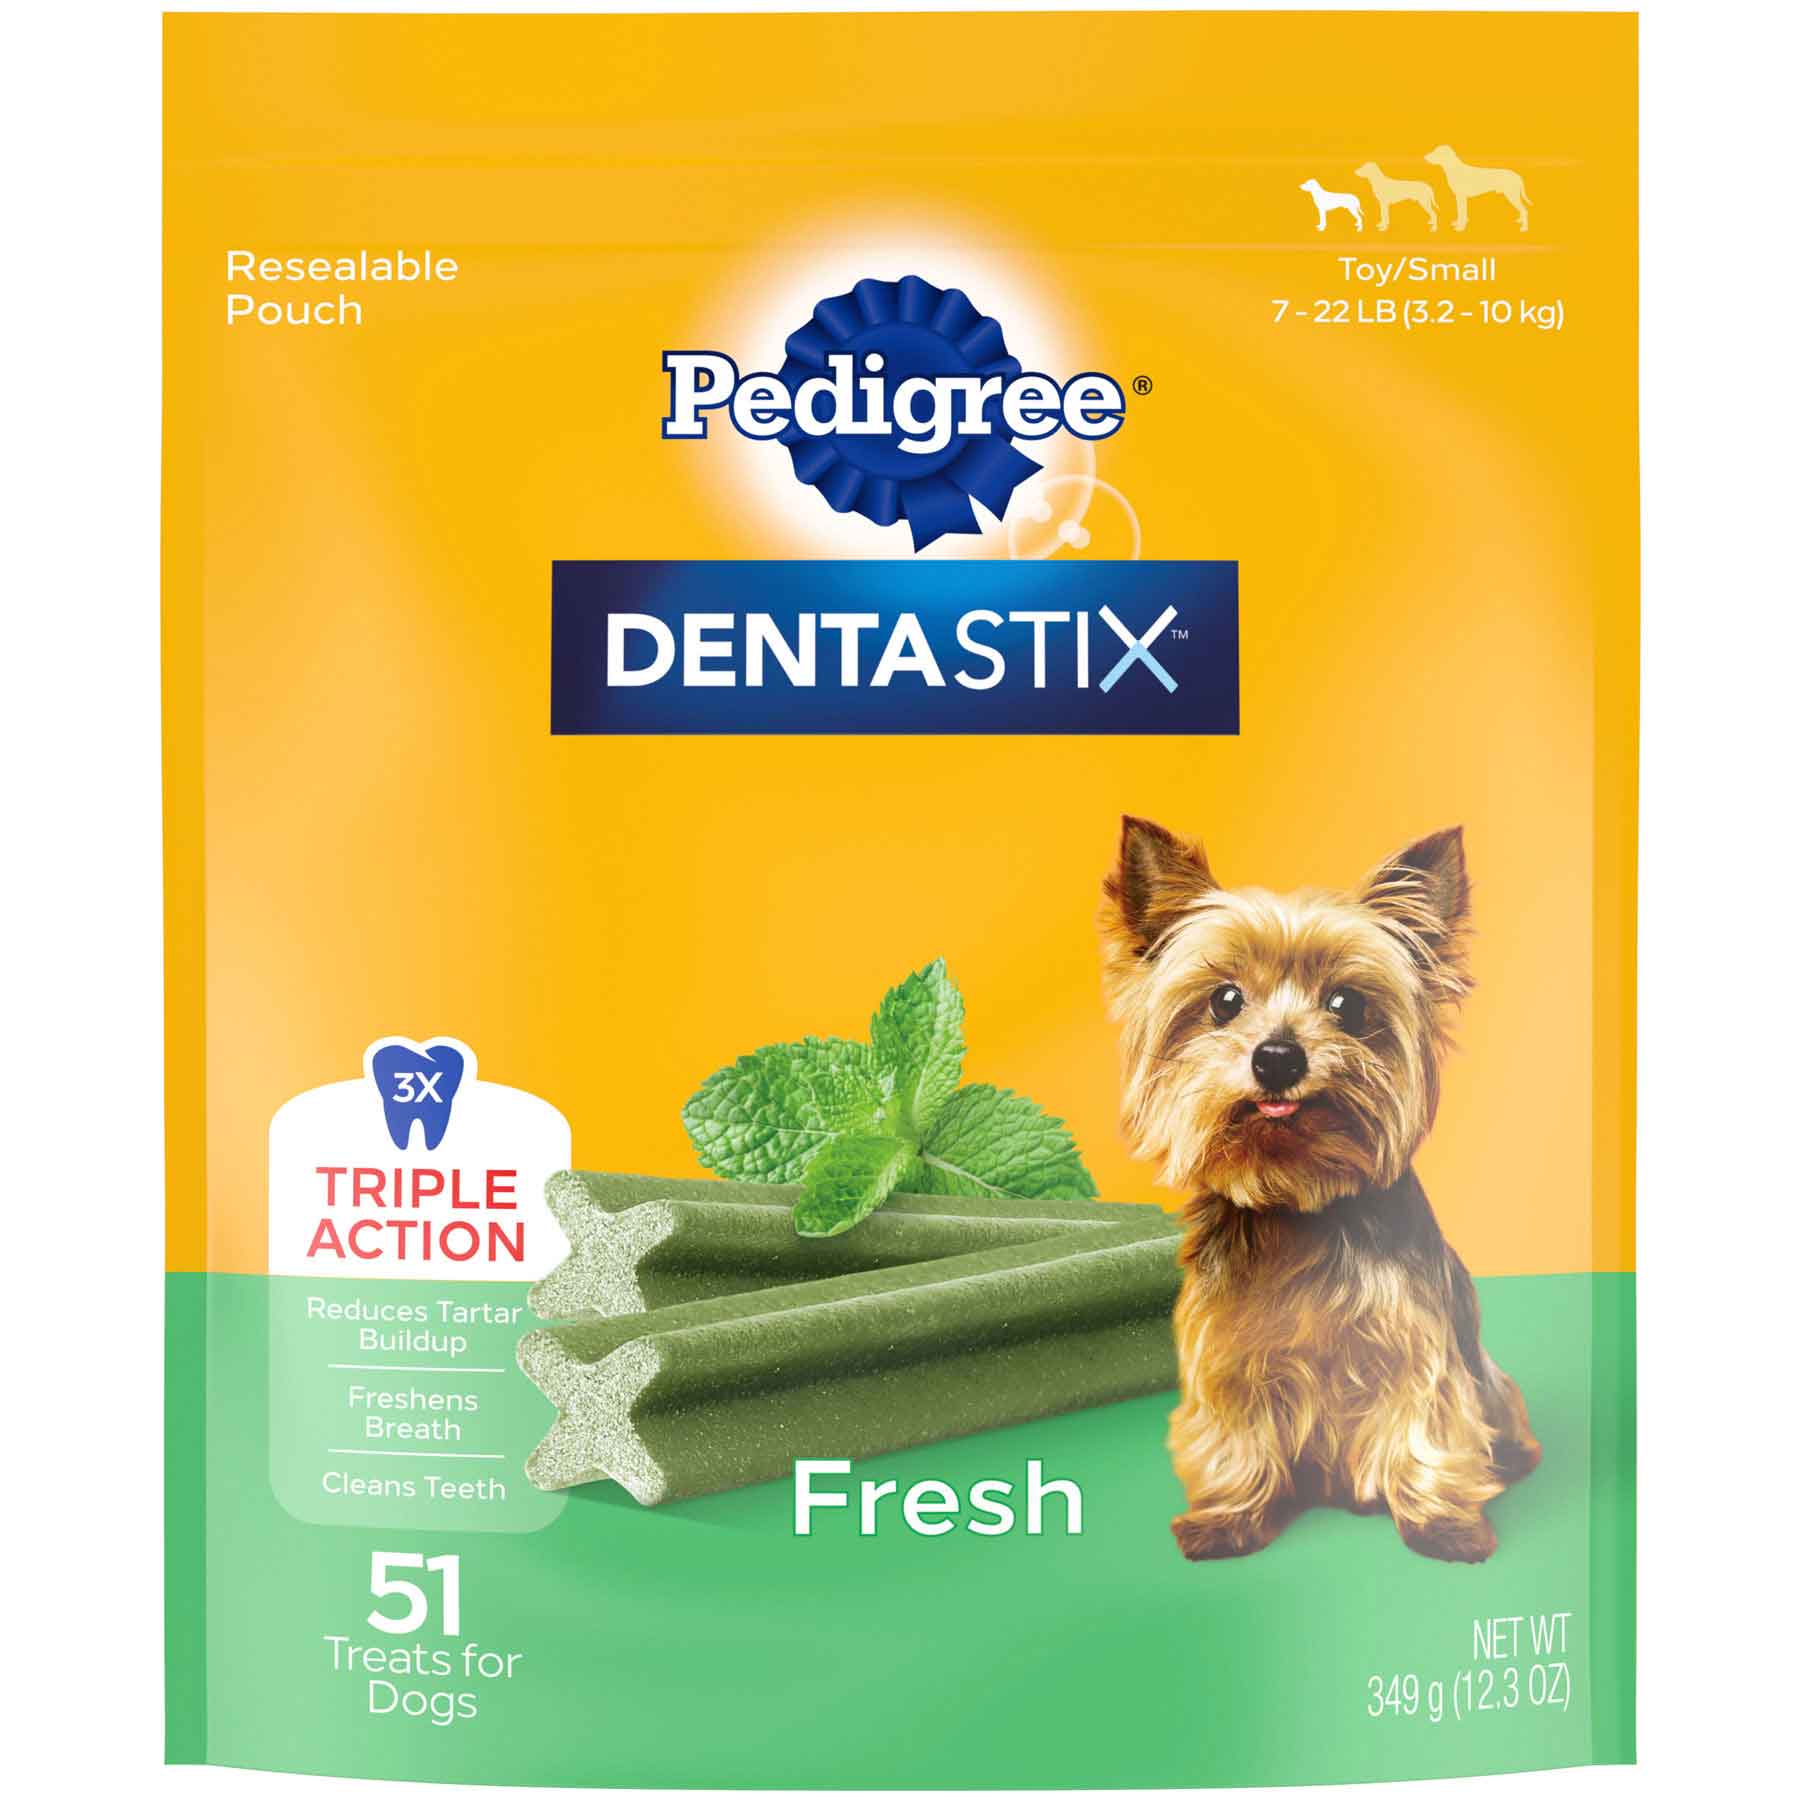 Pedigree Dentastix Dental Dog Treats for Toy/Small Dogs - Fresh Flavor Dental Bones, 12.66 Ounces Pack (51 Treats)